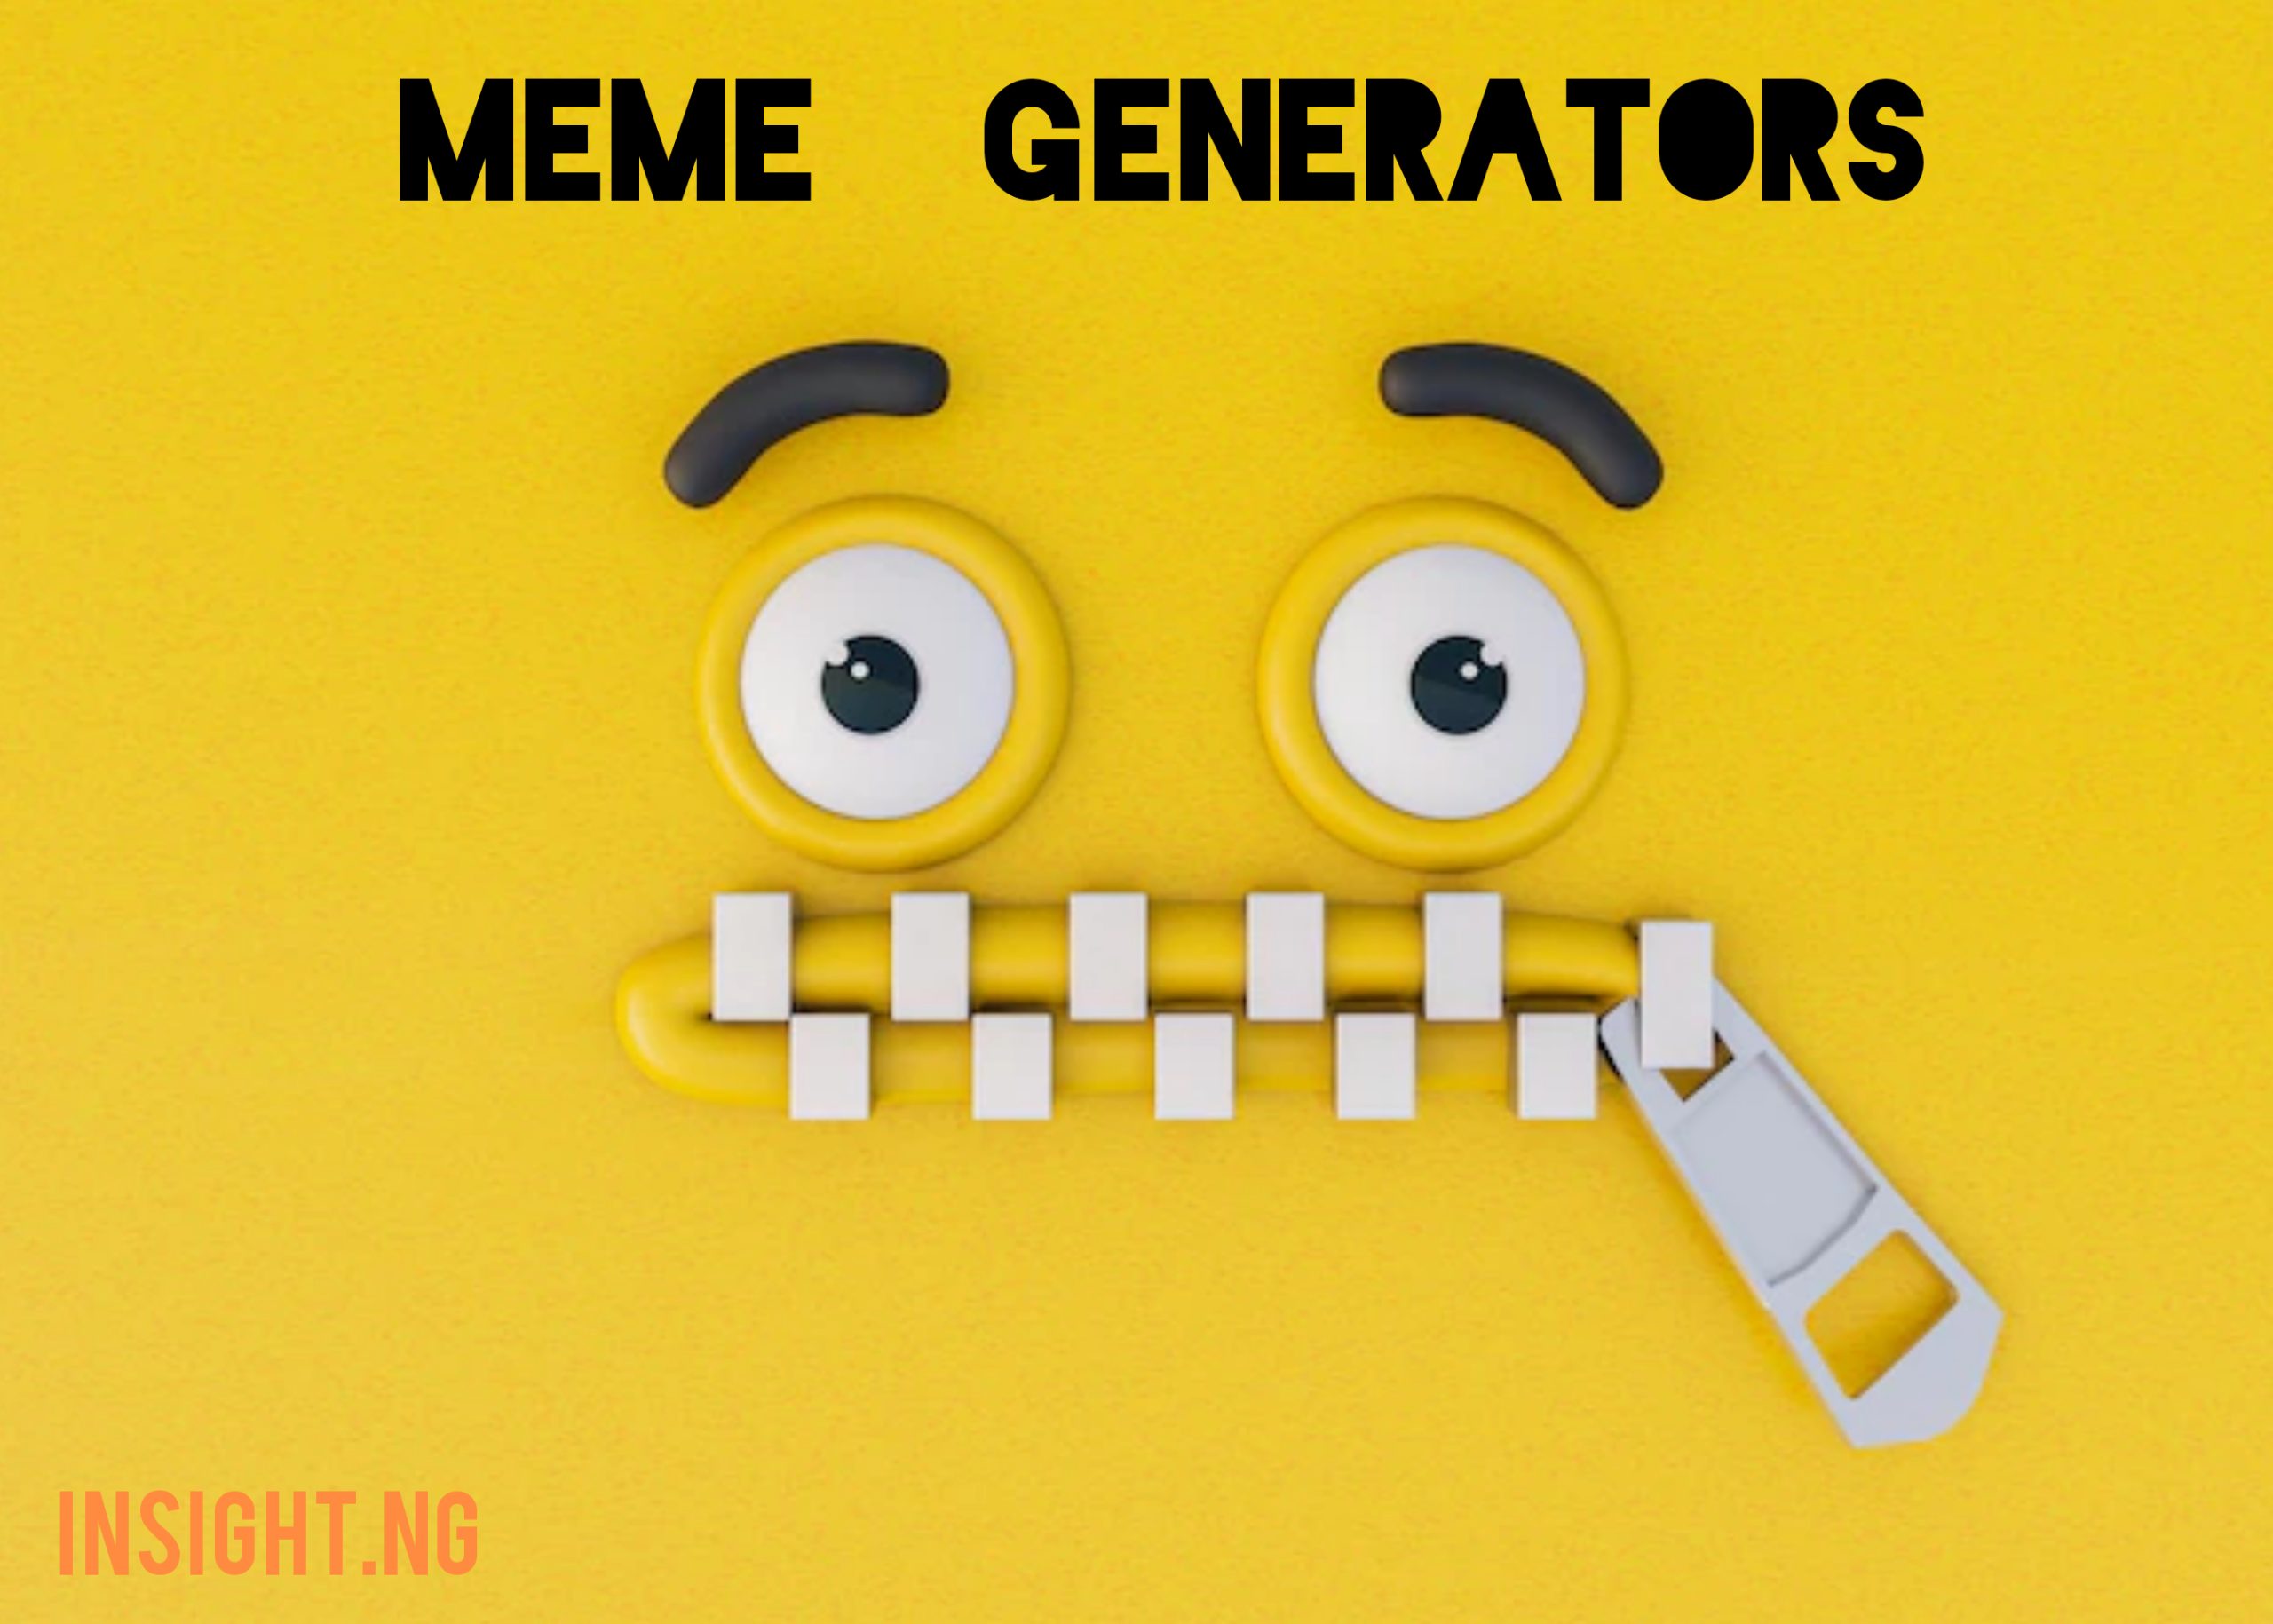 ZomboDroid's Meme Generator on the App Store